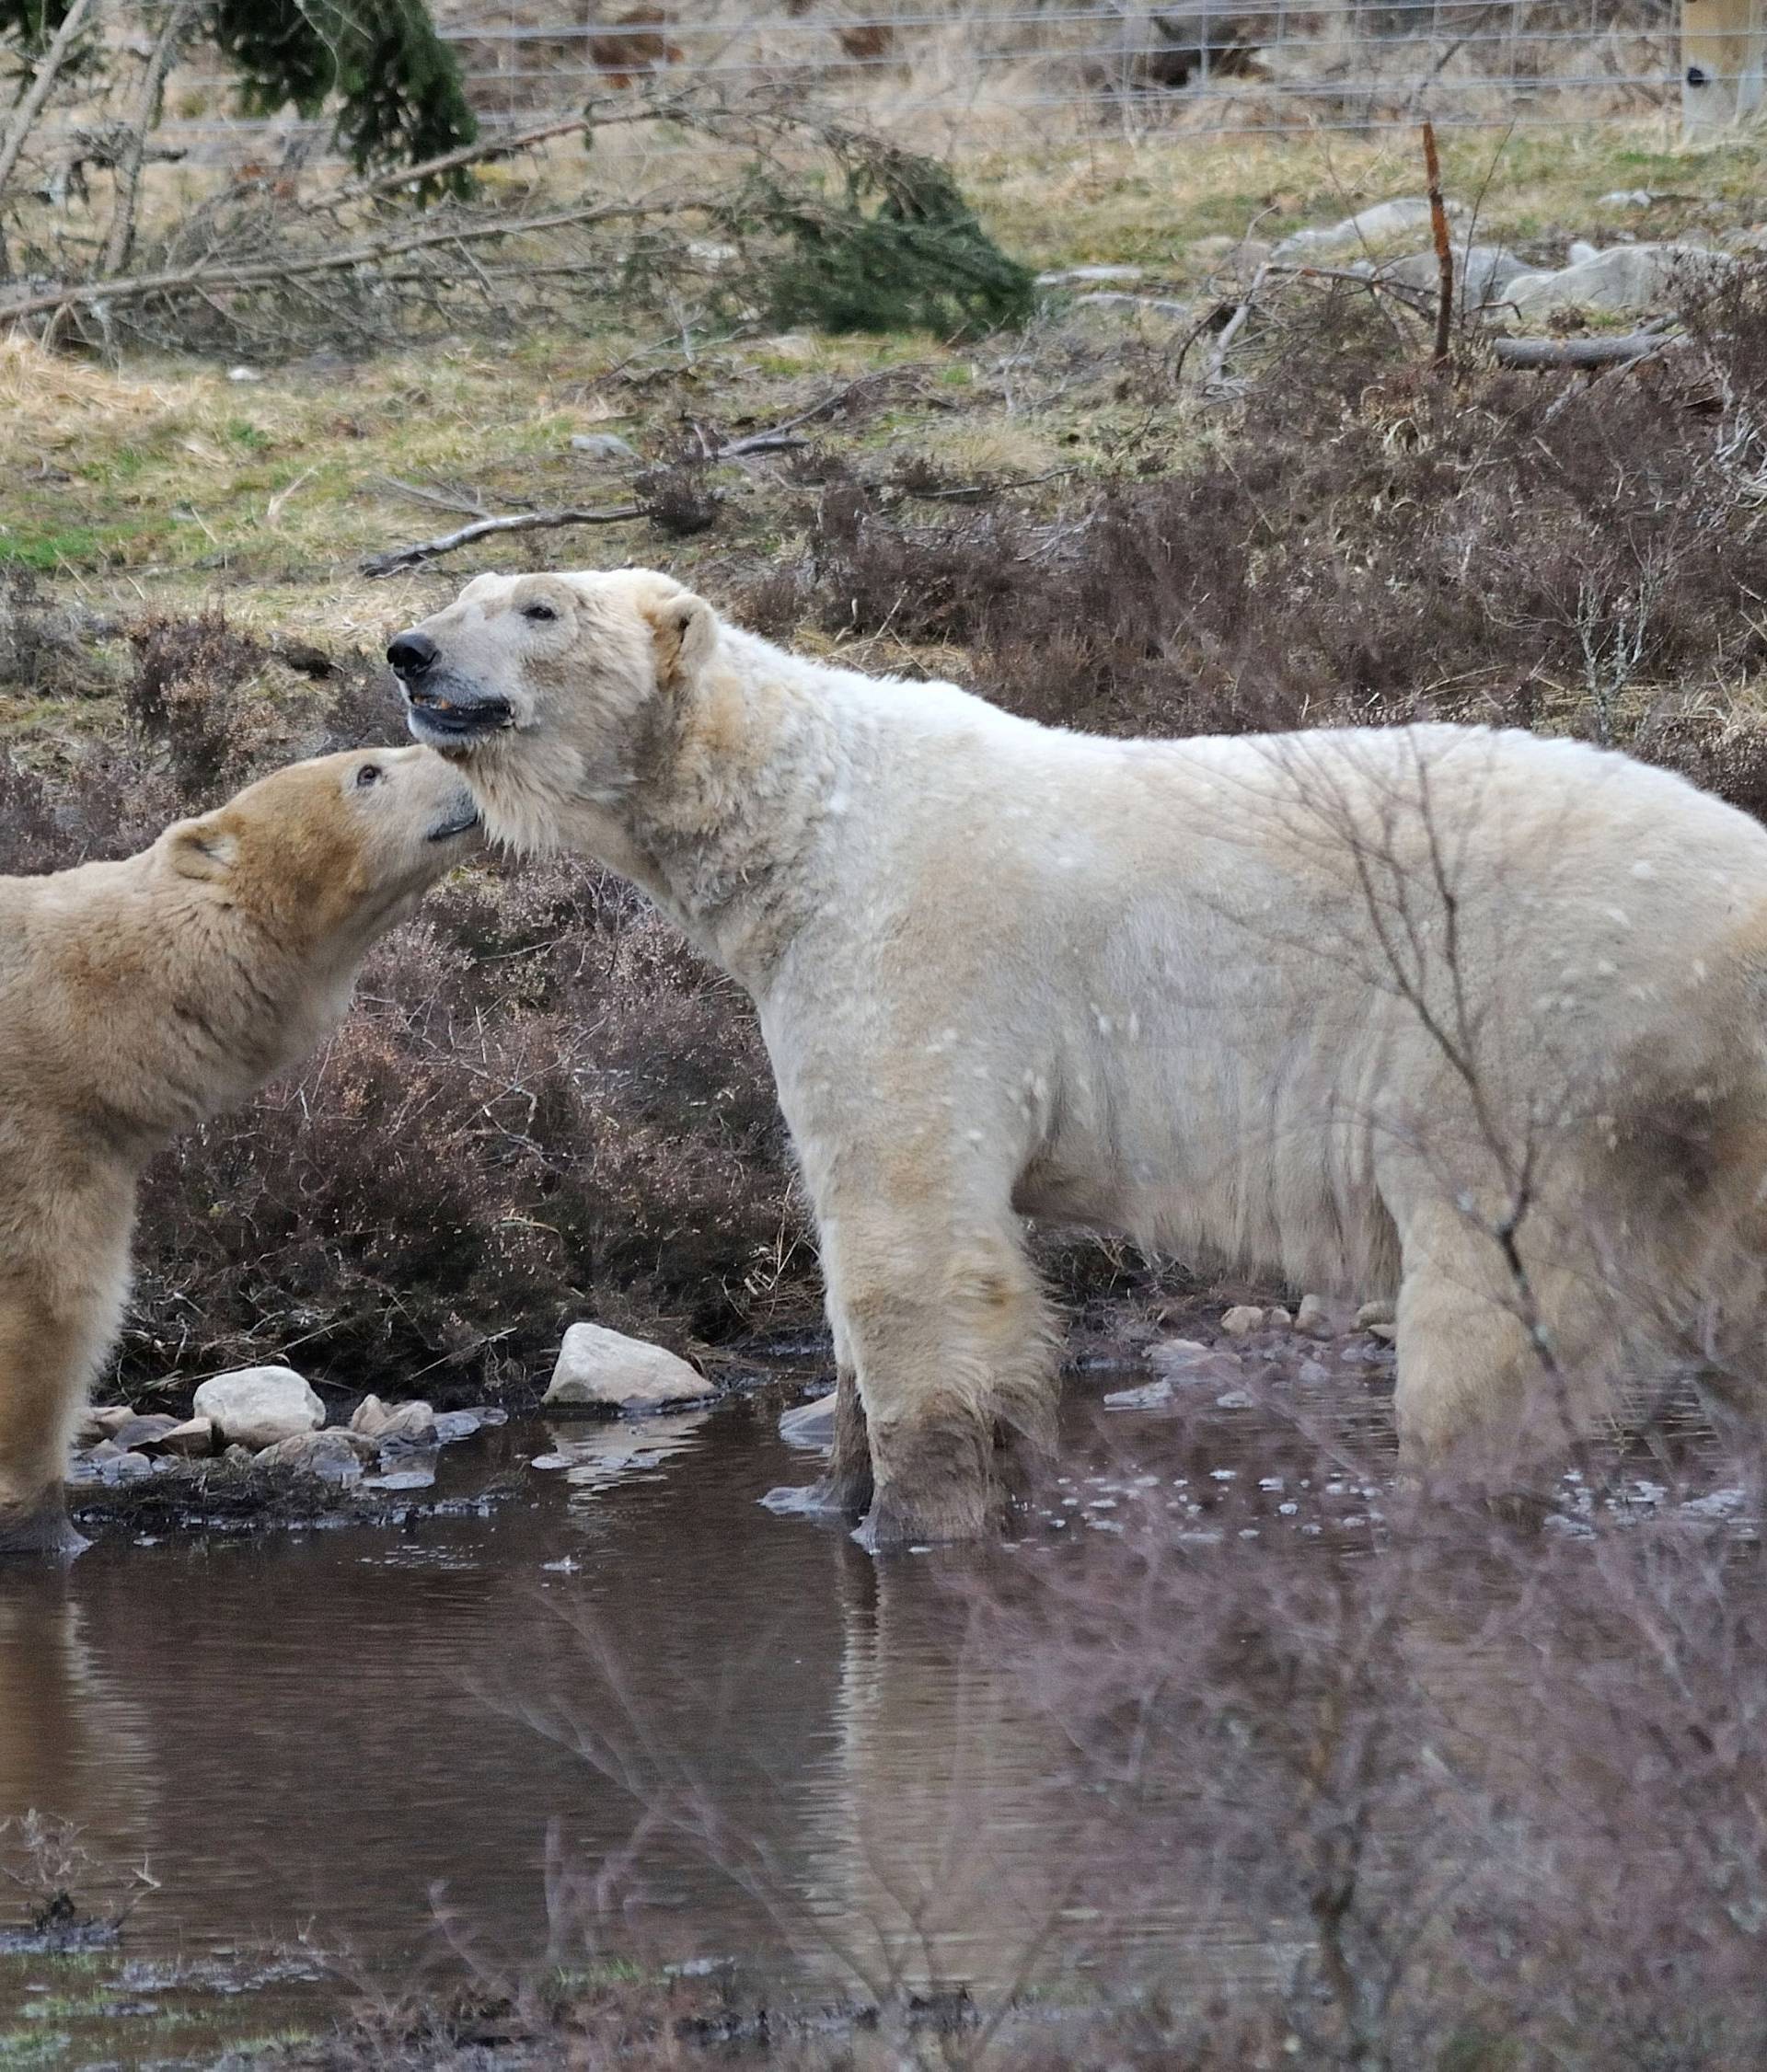 Polar bears Victoria and Arktos interact in Highland Wildlife Park in Kincraig